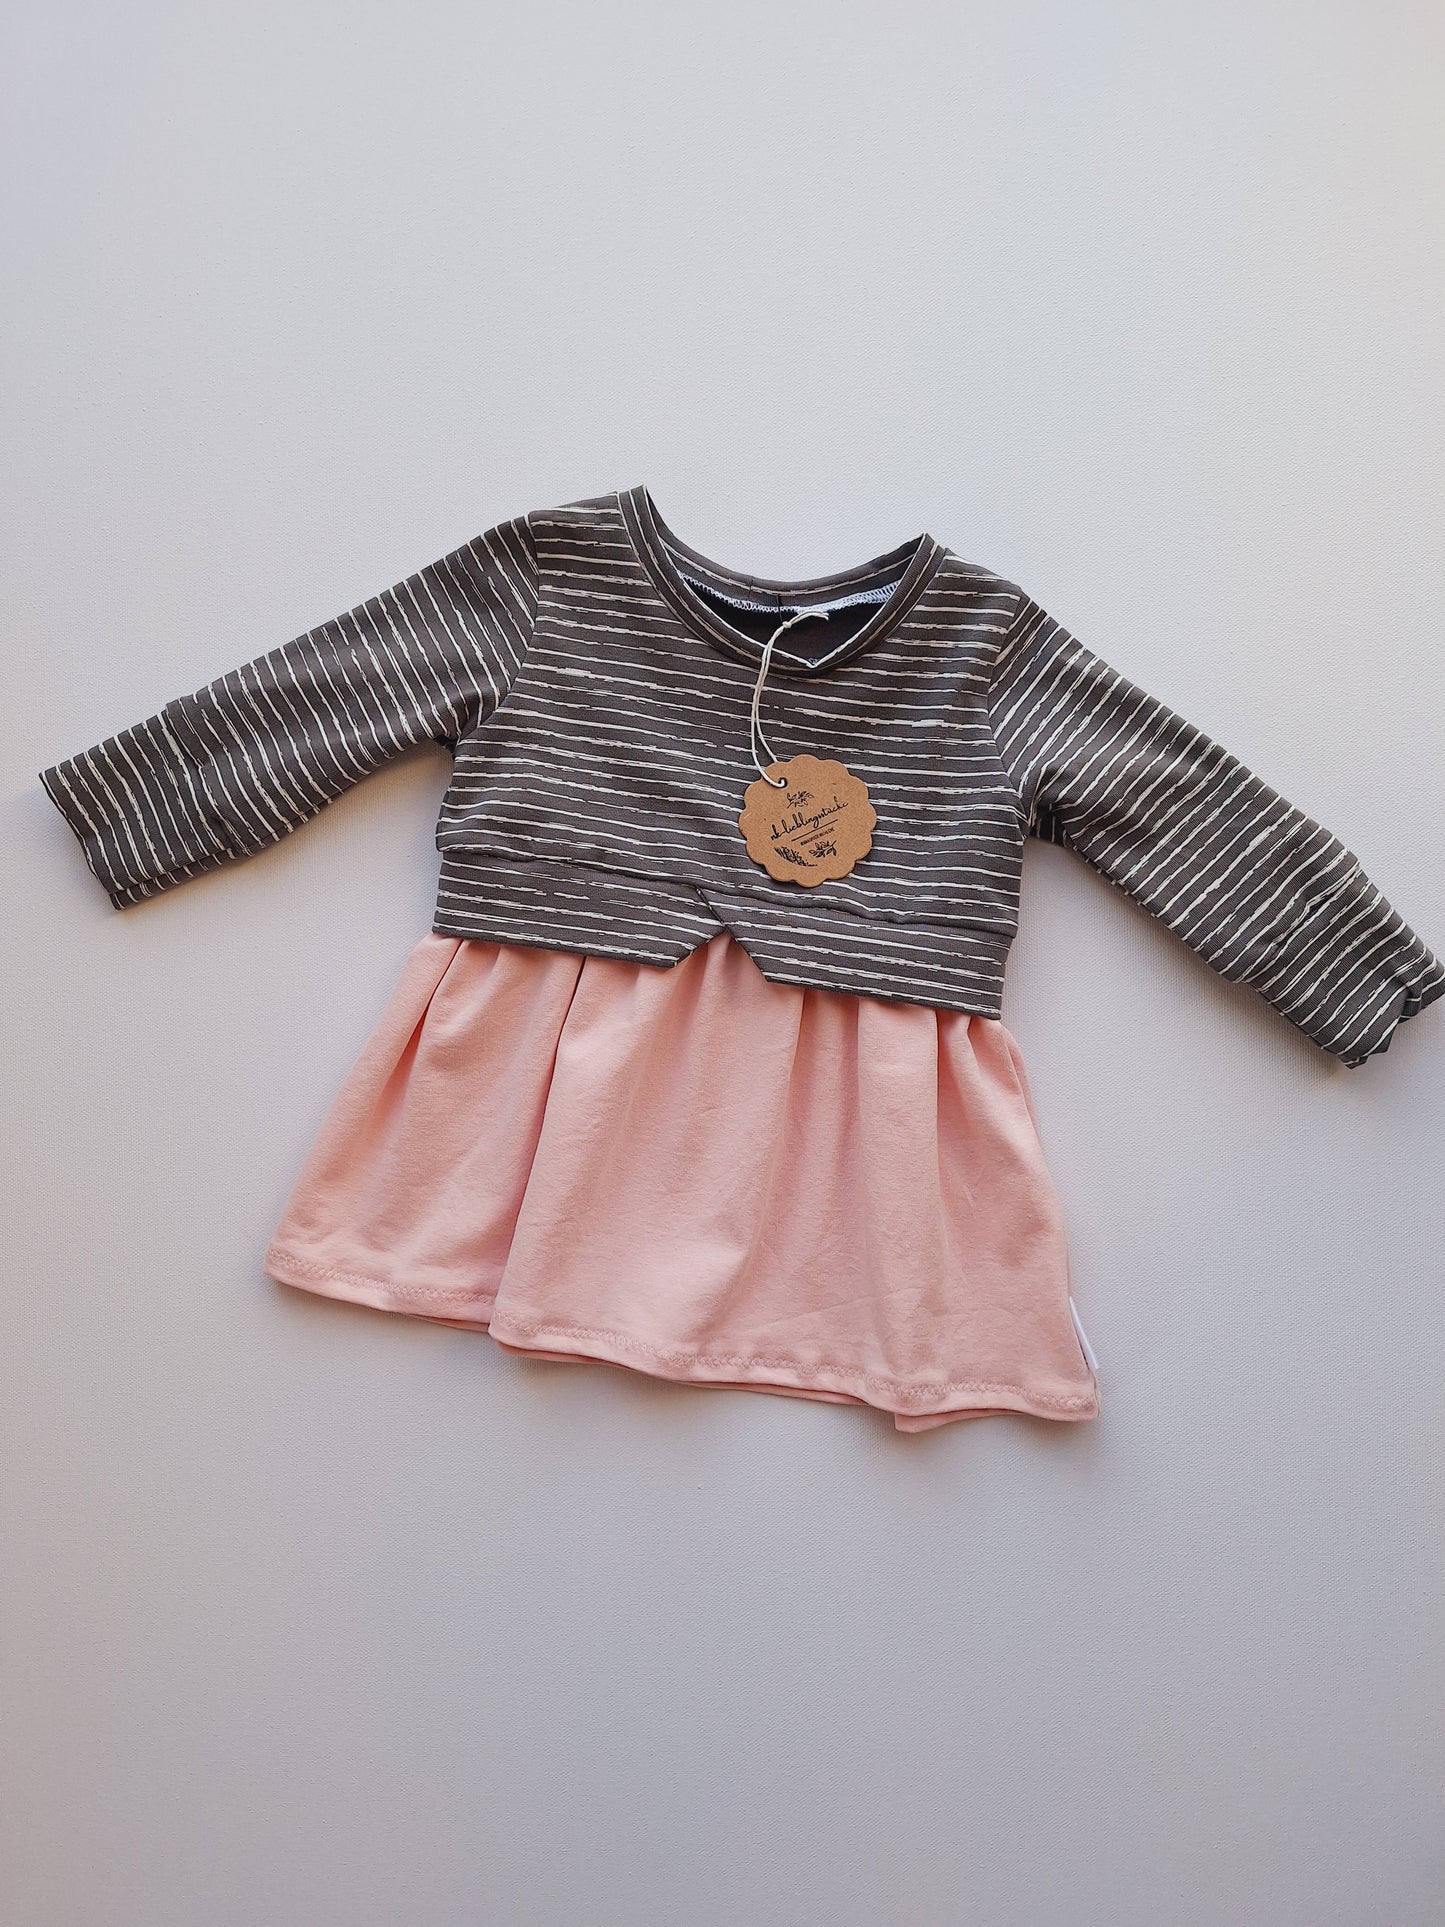 Girly Sweater "Streifen-rosa"